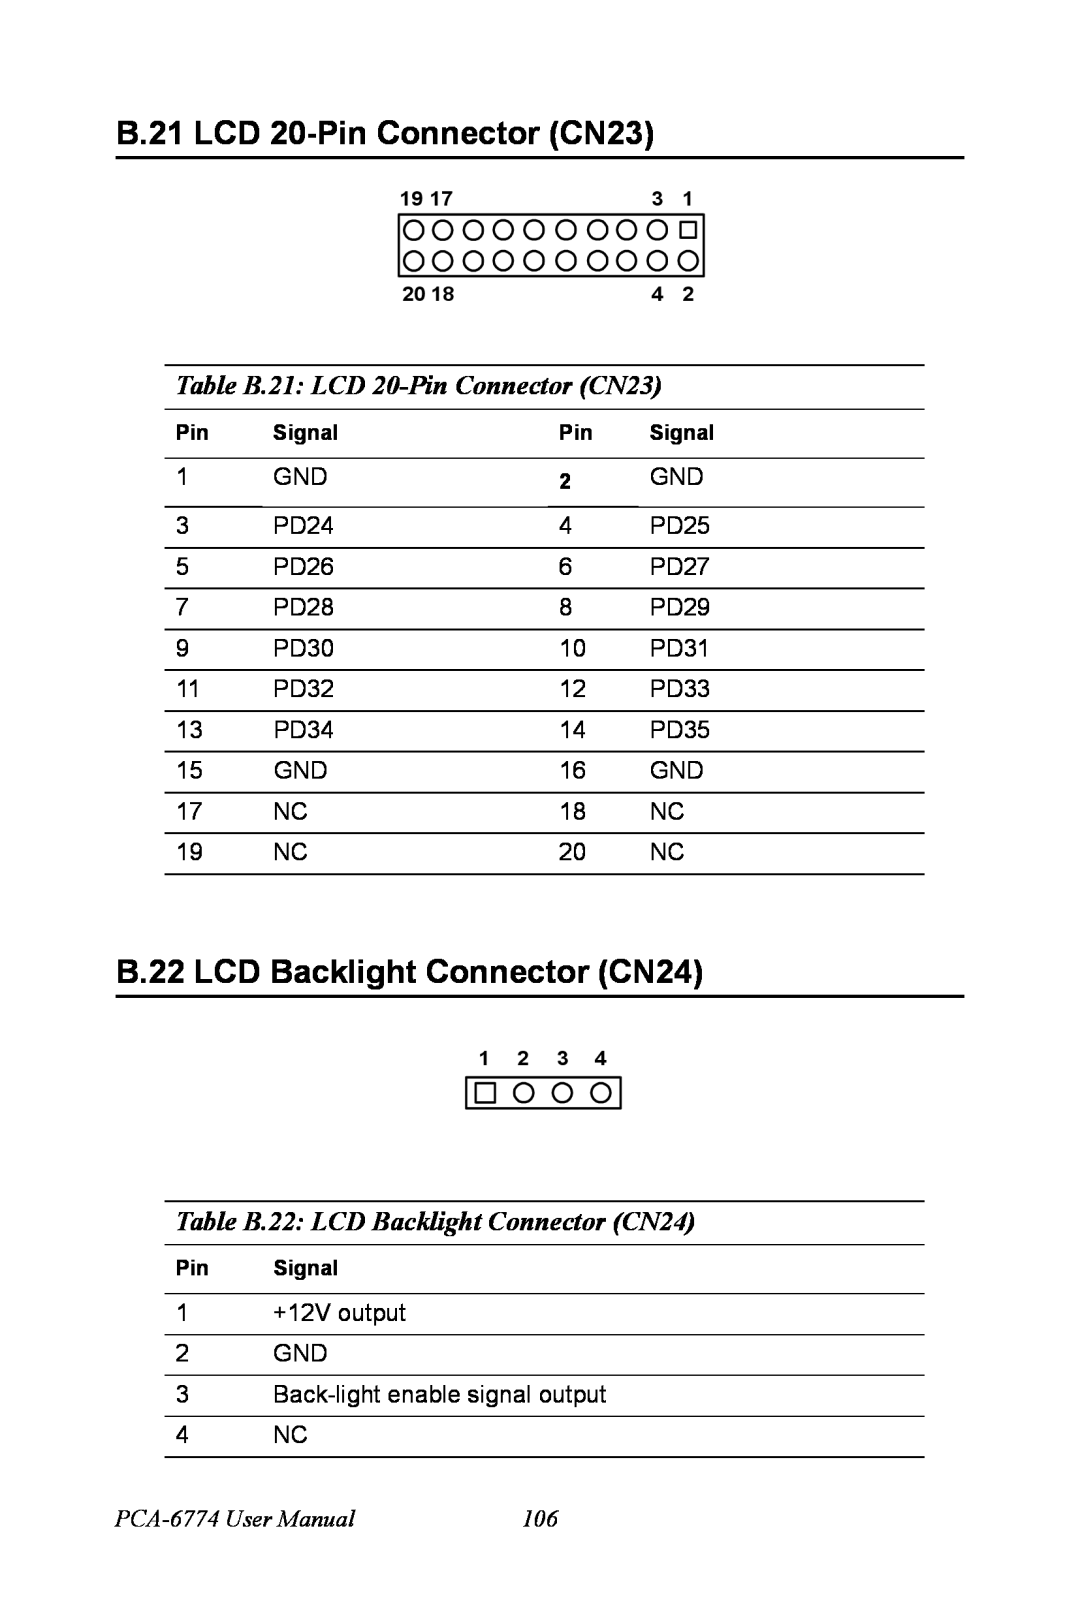 Advantech user manual B.22 LCD Backlight Connector CN24, Table B.21 LCD 20-Pin Connector CN23, PCA-6774 User Manual 